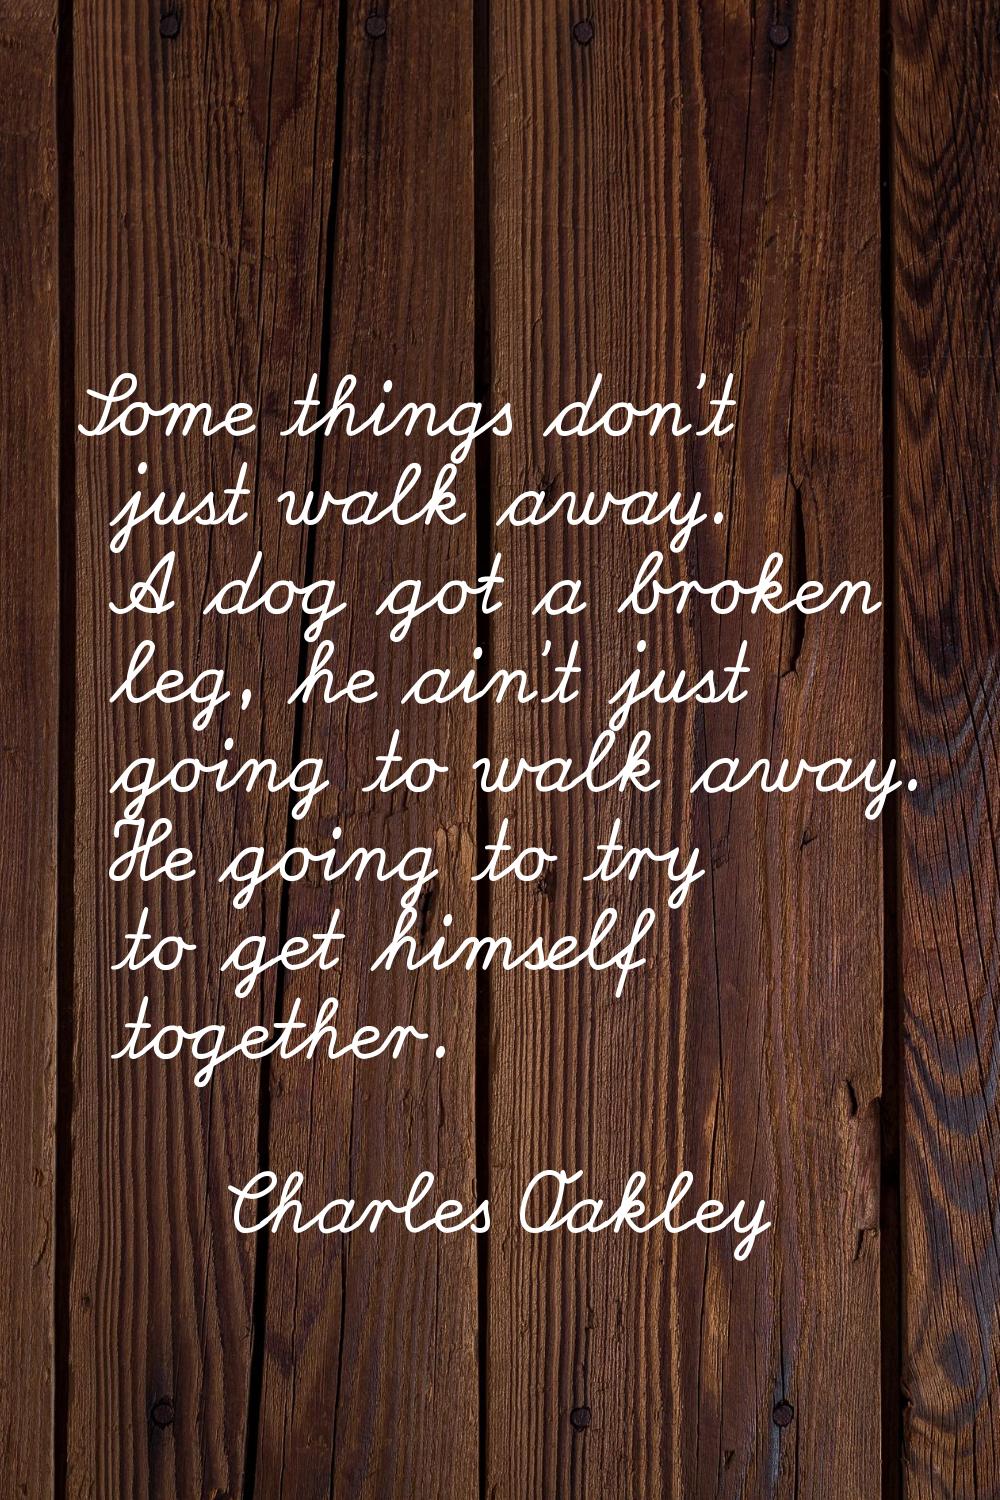 Some things don't just walk away. A dog got a broken leg, he ain't just going to walk away. He goin